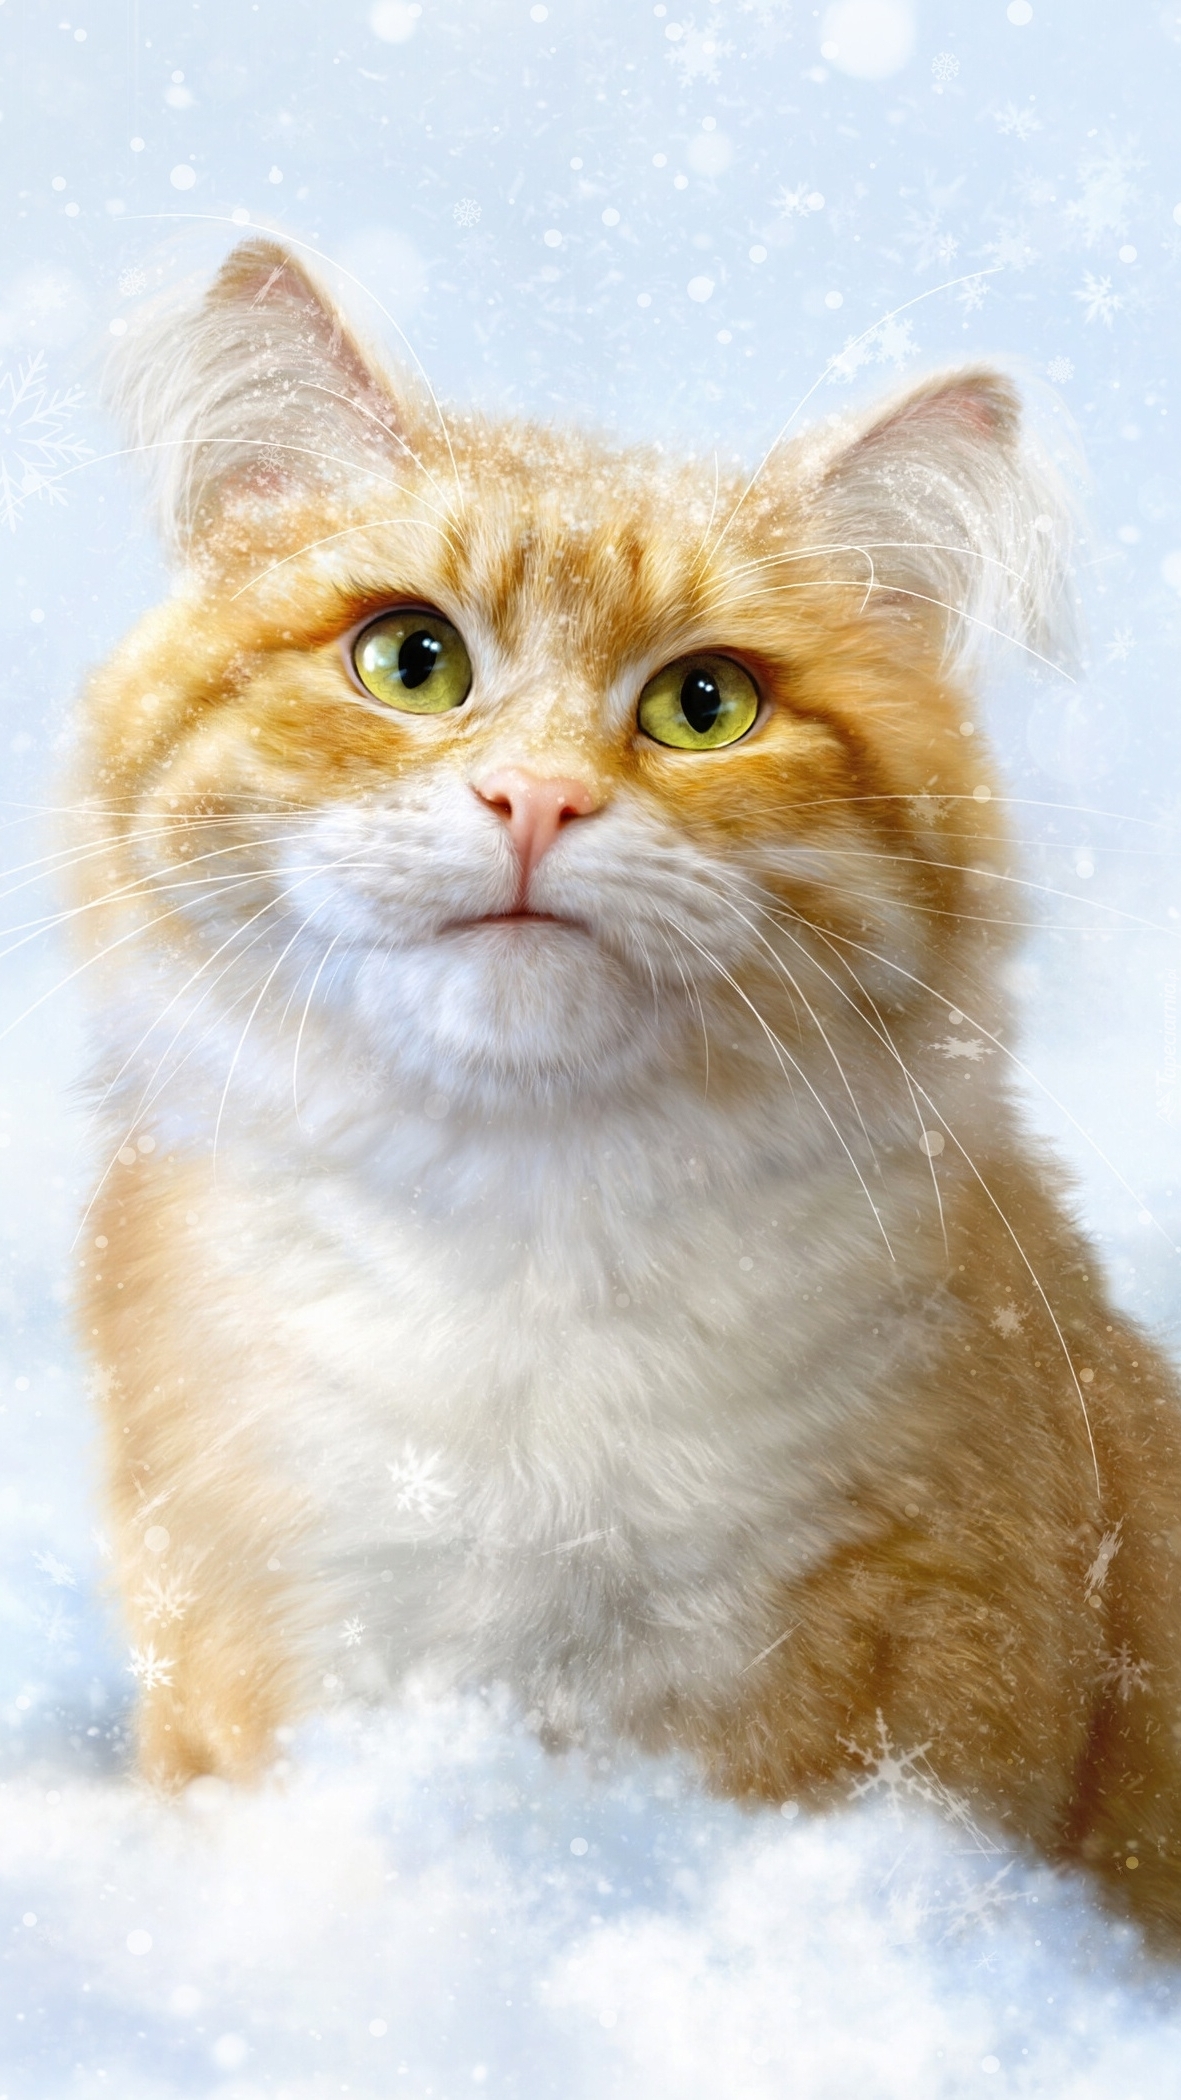 Rudy kot w śniegu